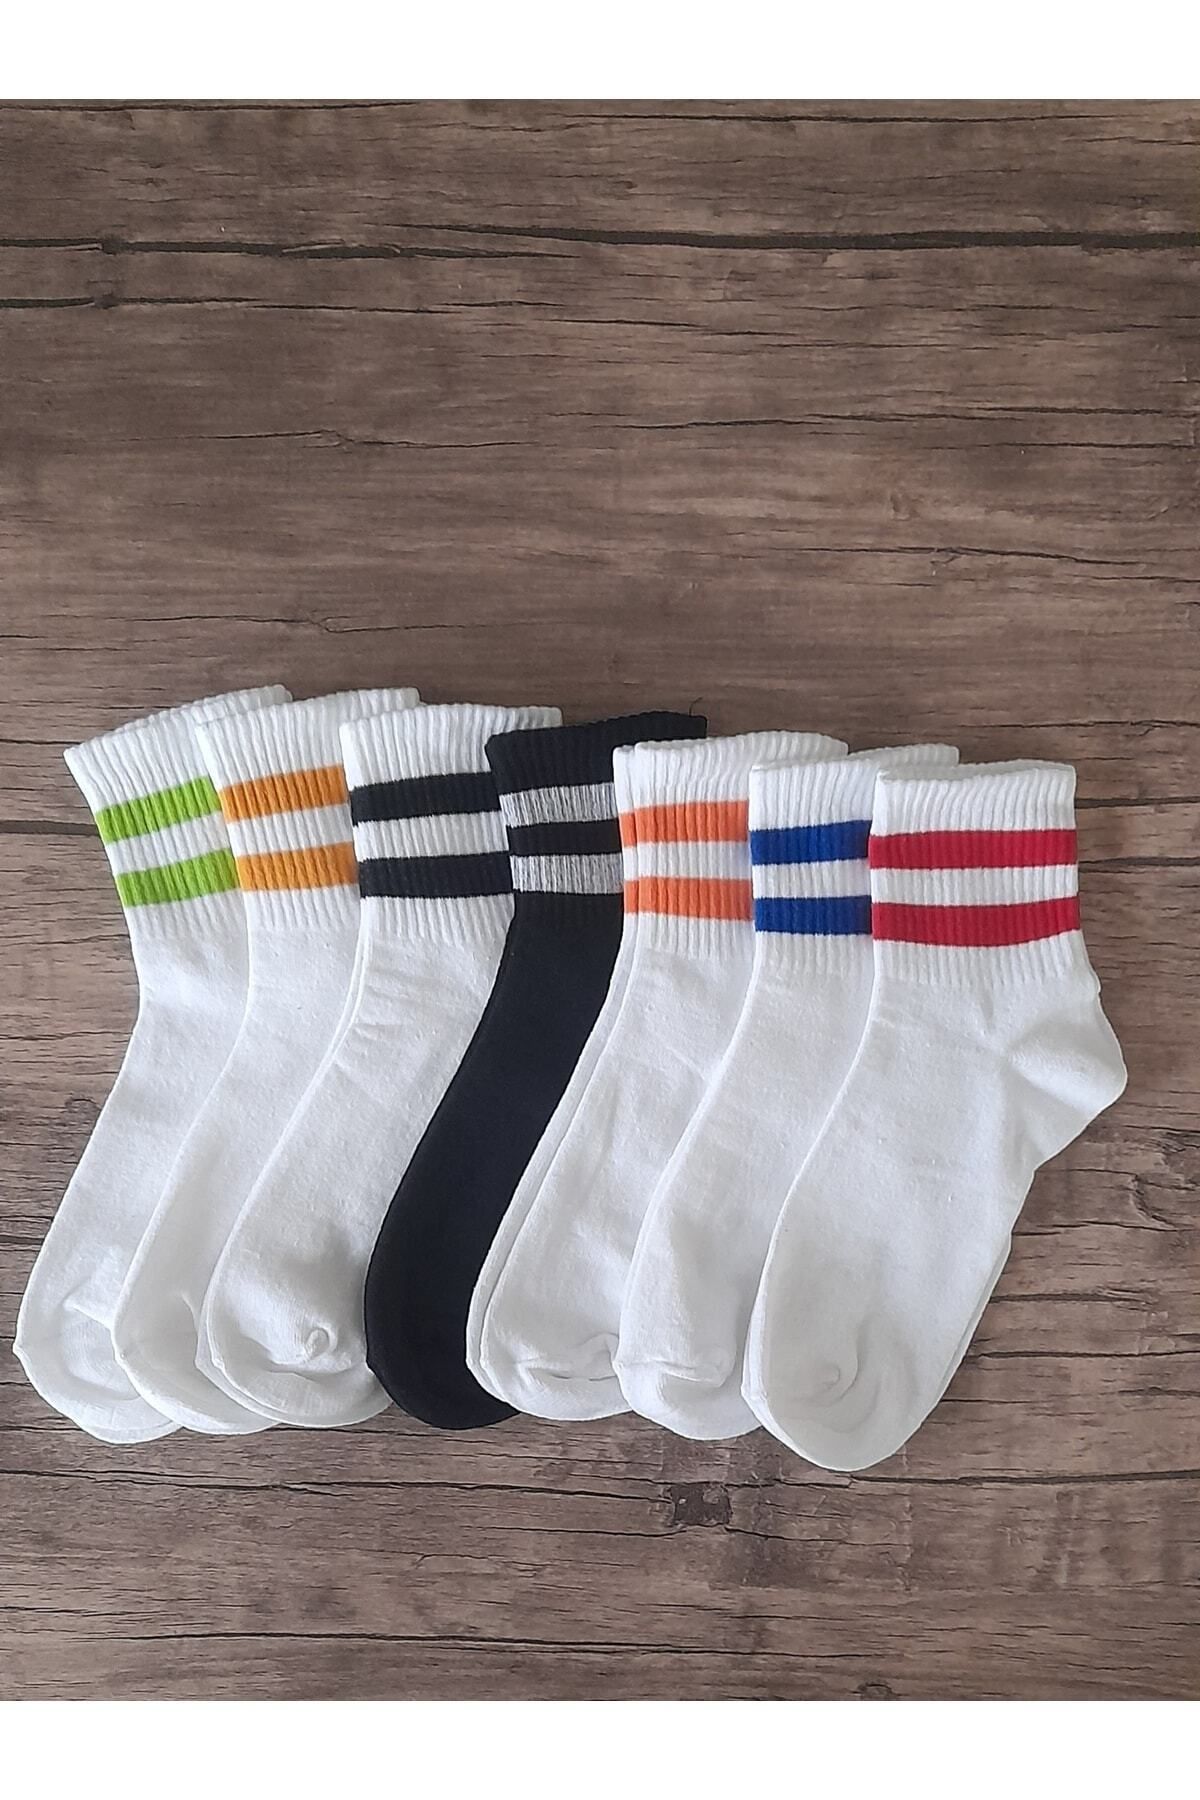 SOCKSHION Unisex Beyaz Çizgili Pamuklu Yarım Konç Çorap 7'li Paket Rahat Ve Şık